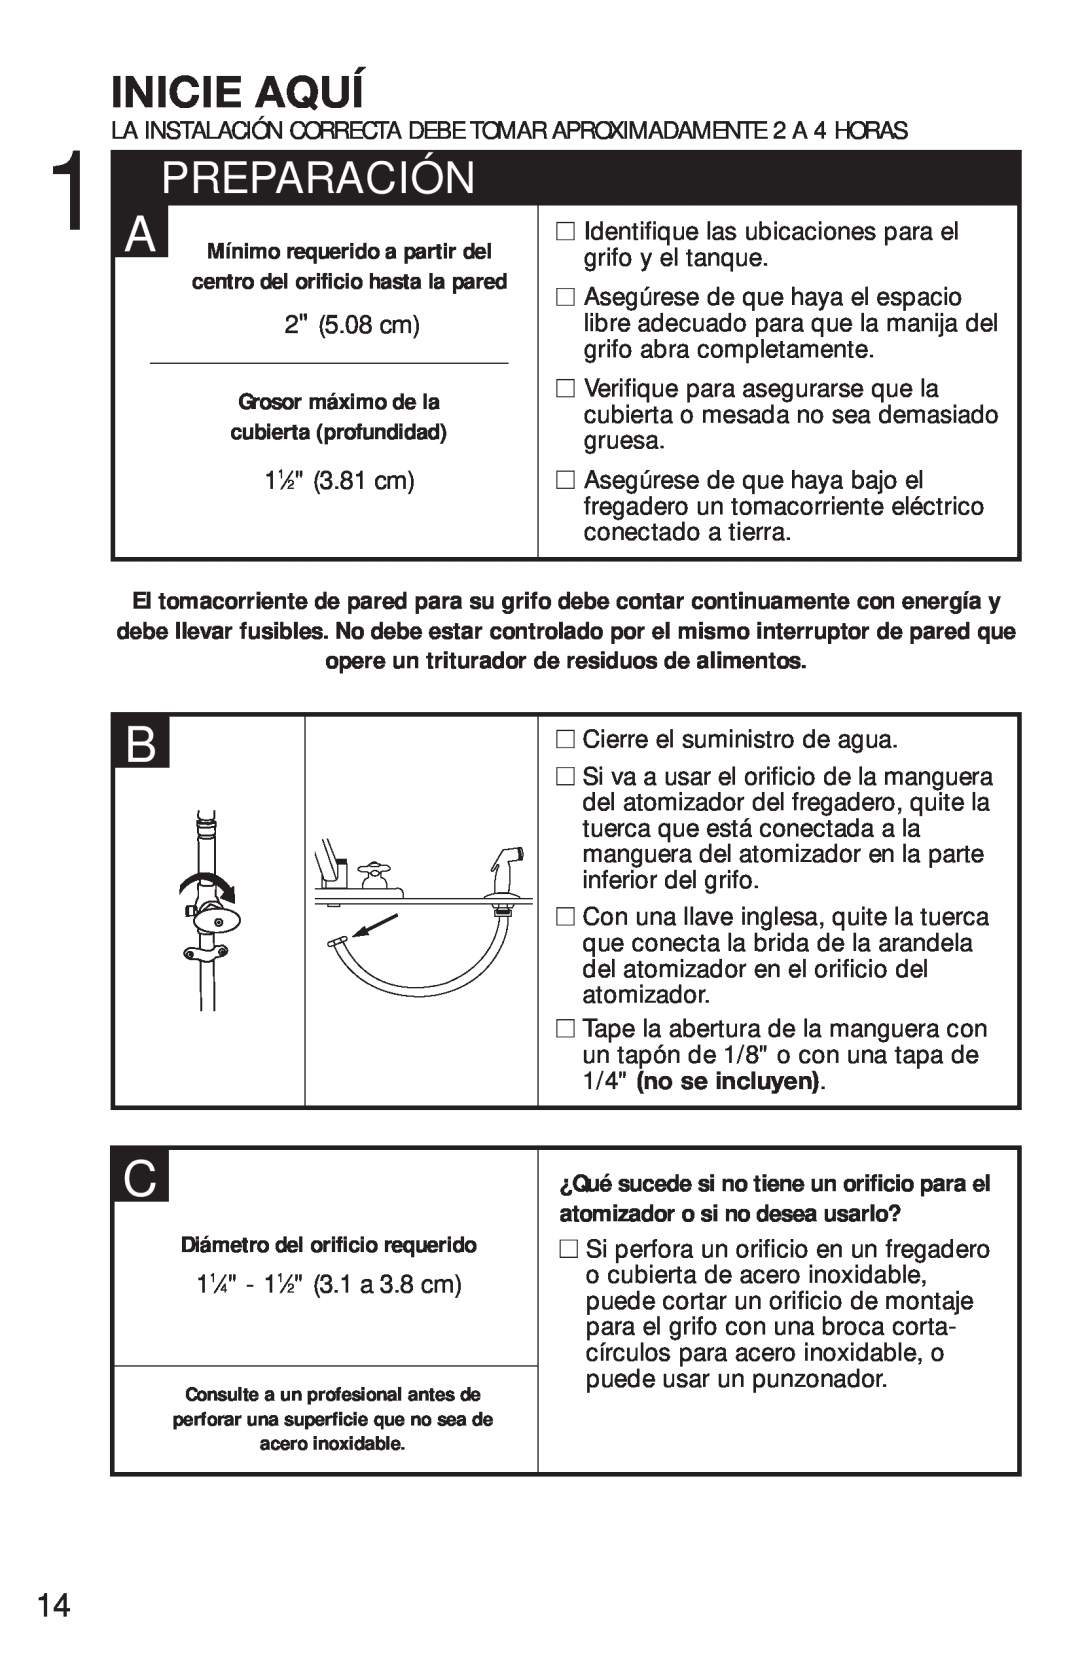 InSinkErator FAUCET owner manual Inicie Aquí, Preparación, 2 5.08 cm, 11⁄2 3.81 cm, 11⁄4 - 11⁄2 3.1 a 3.8 cm 